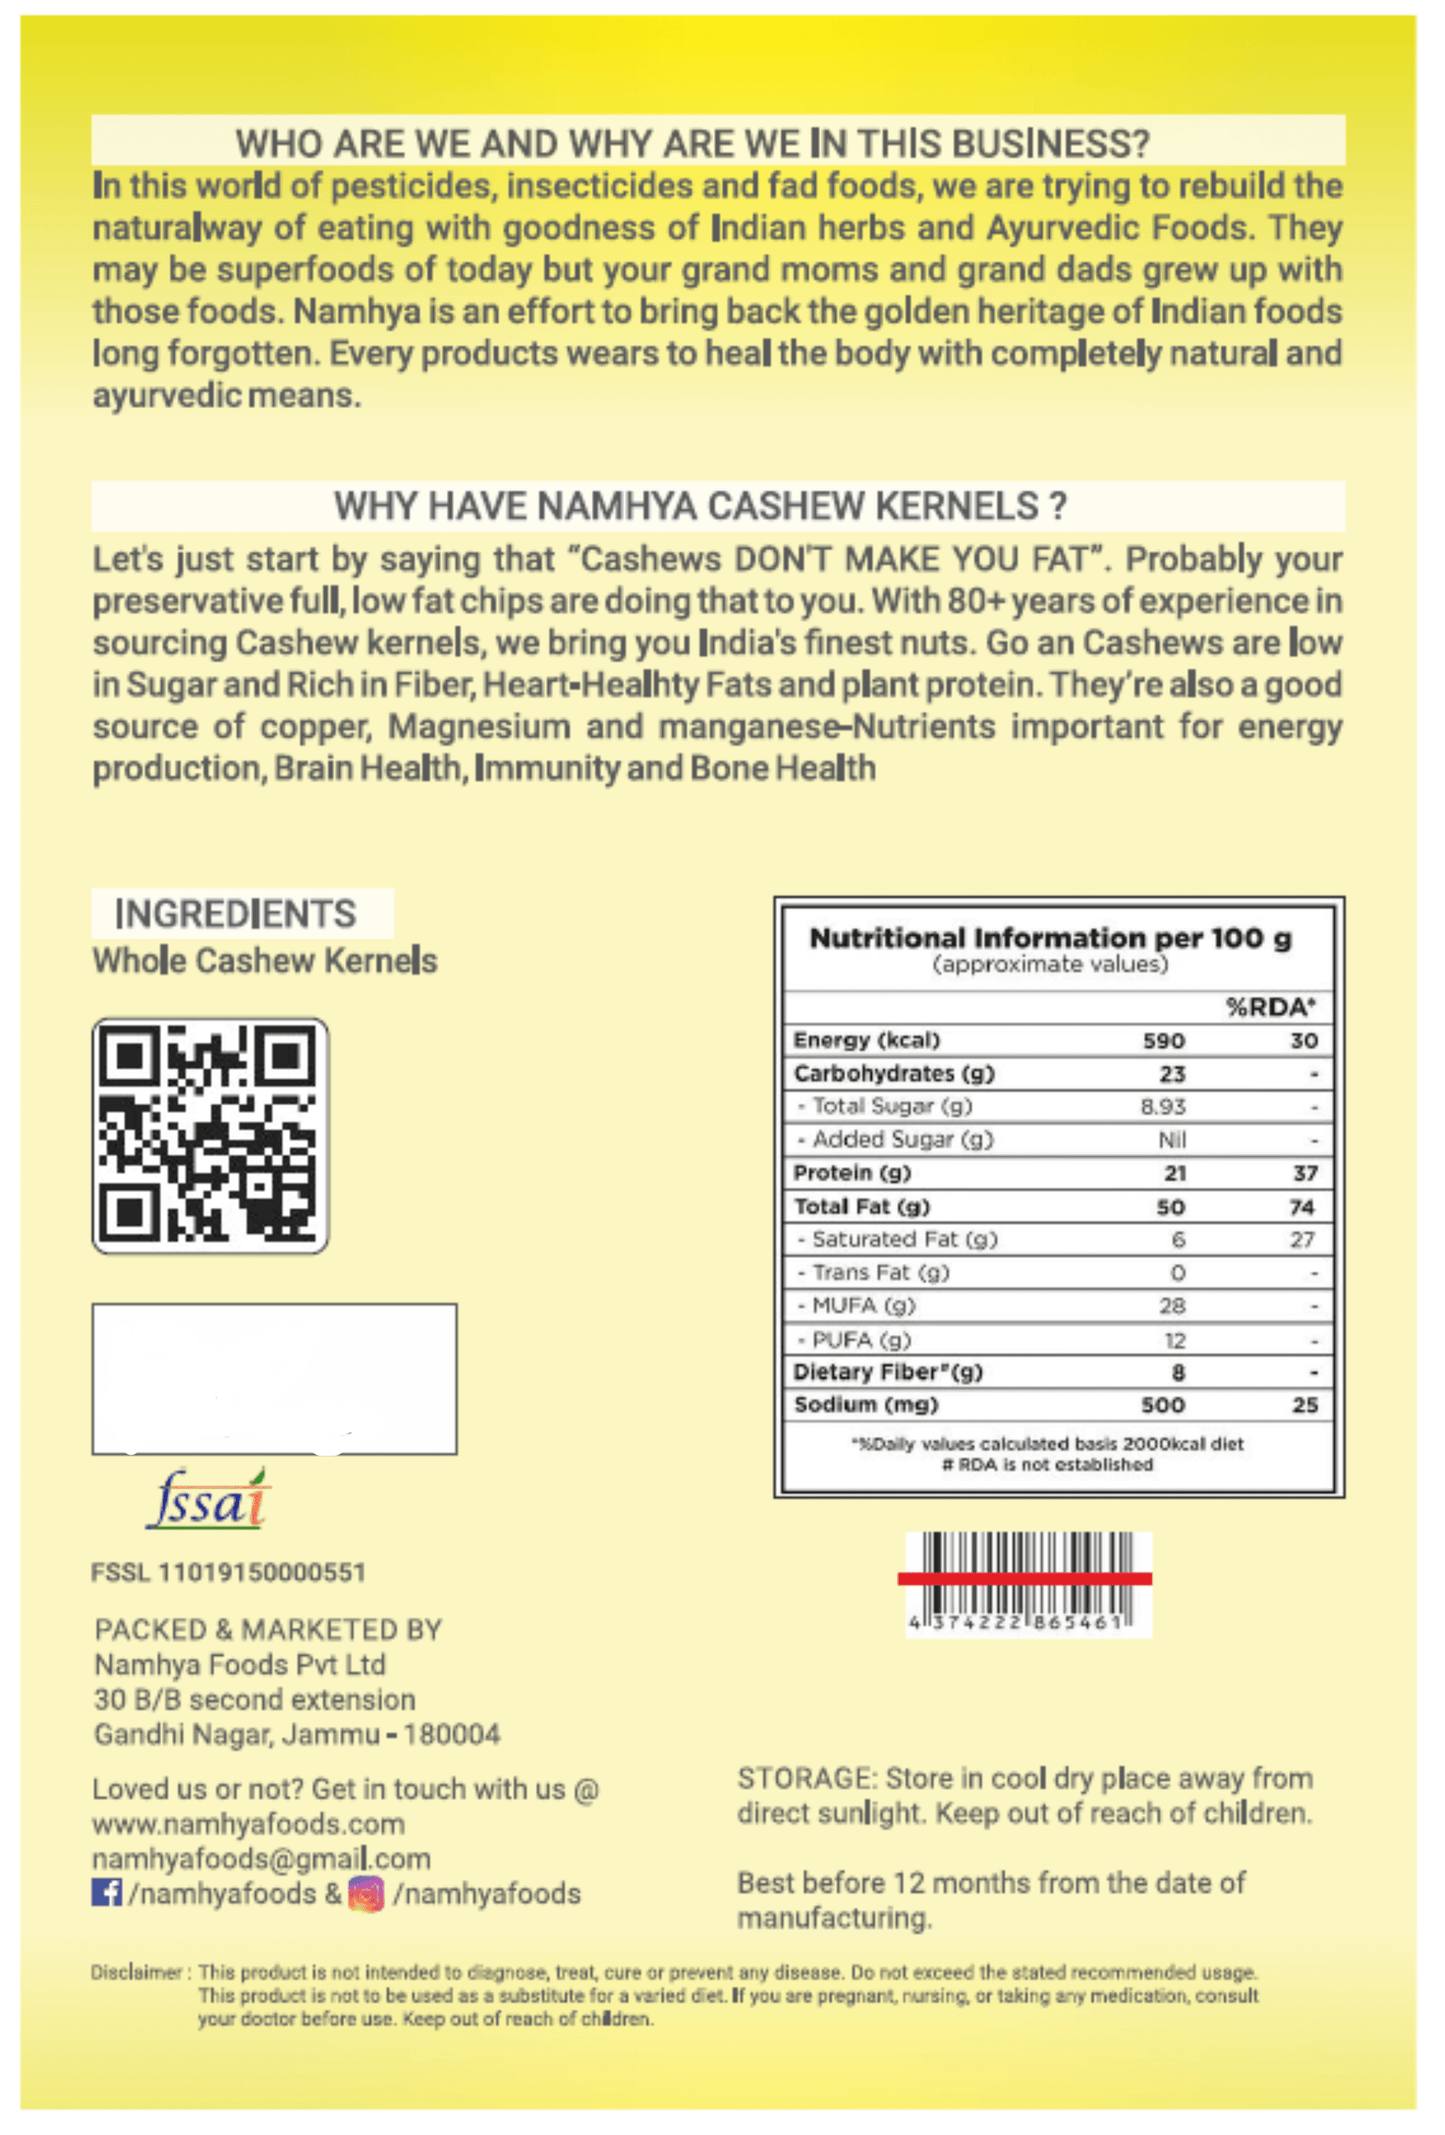 Namhya Cashew Kernels (Gluten Free, Plant Based Protein, 200g)